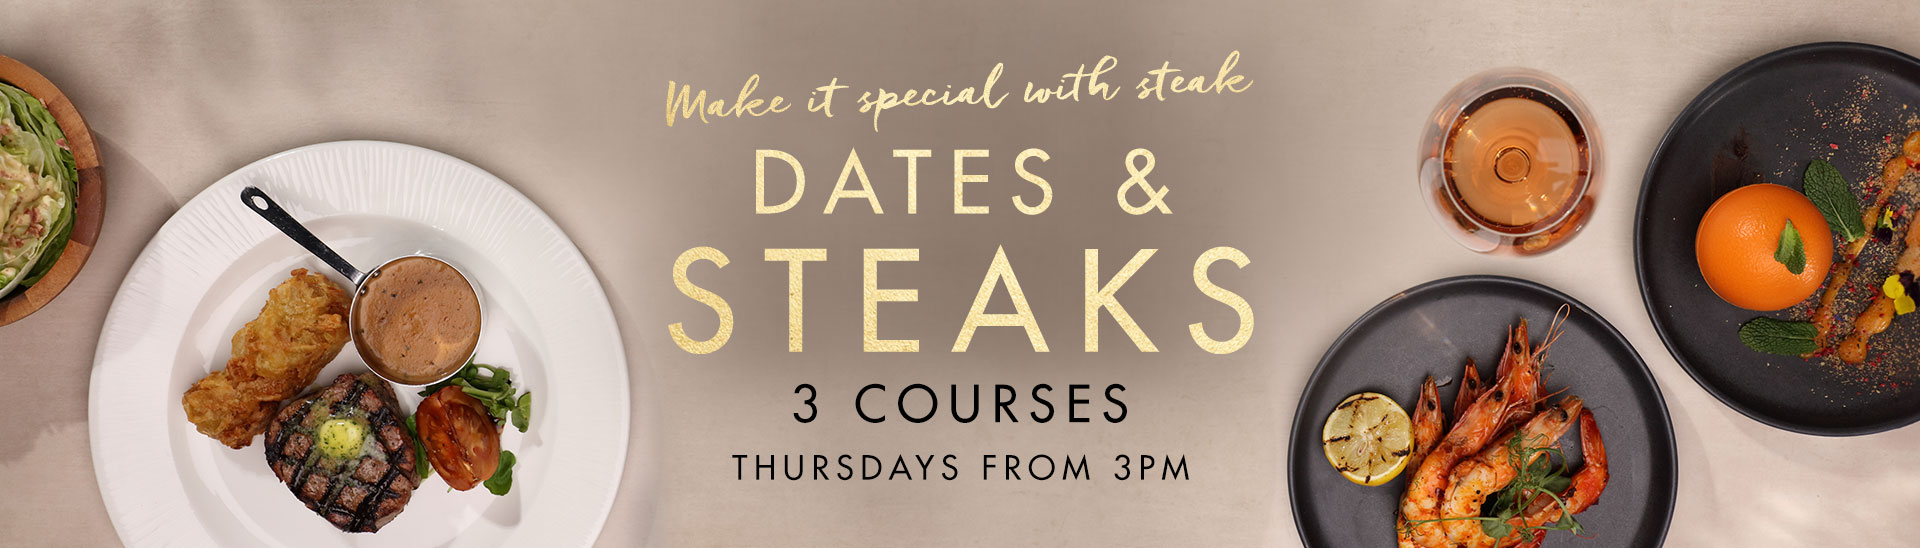 Dates & Steaks at Miller & Carter Ipswich